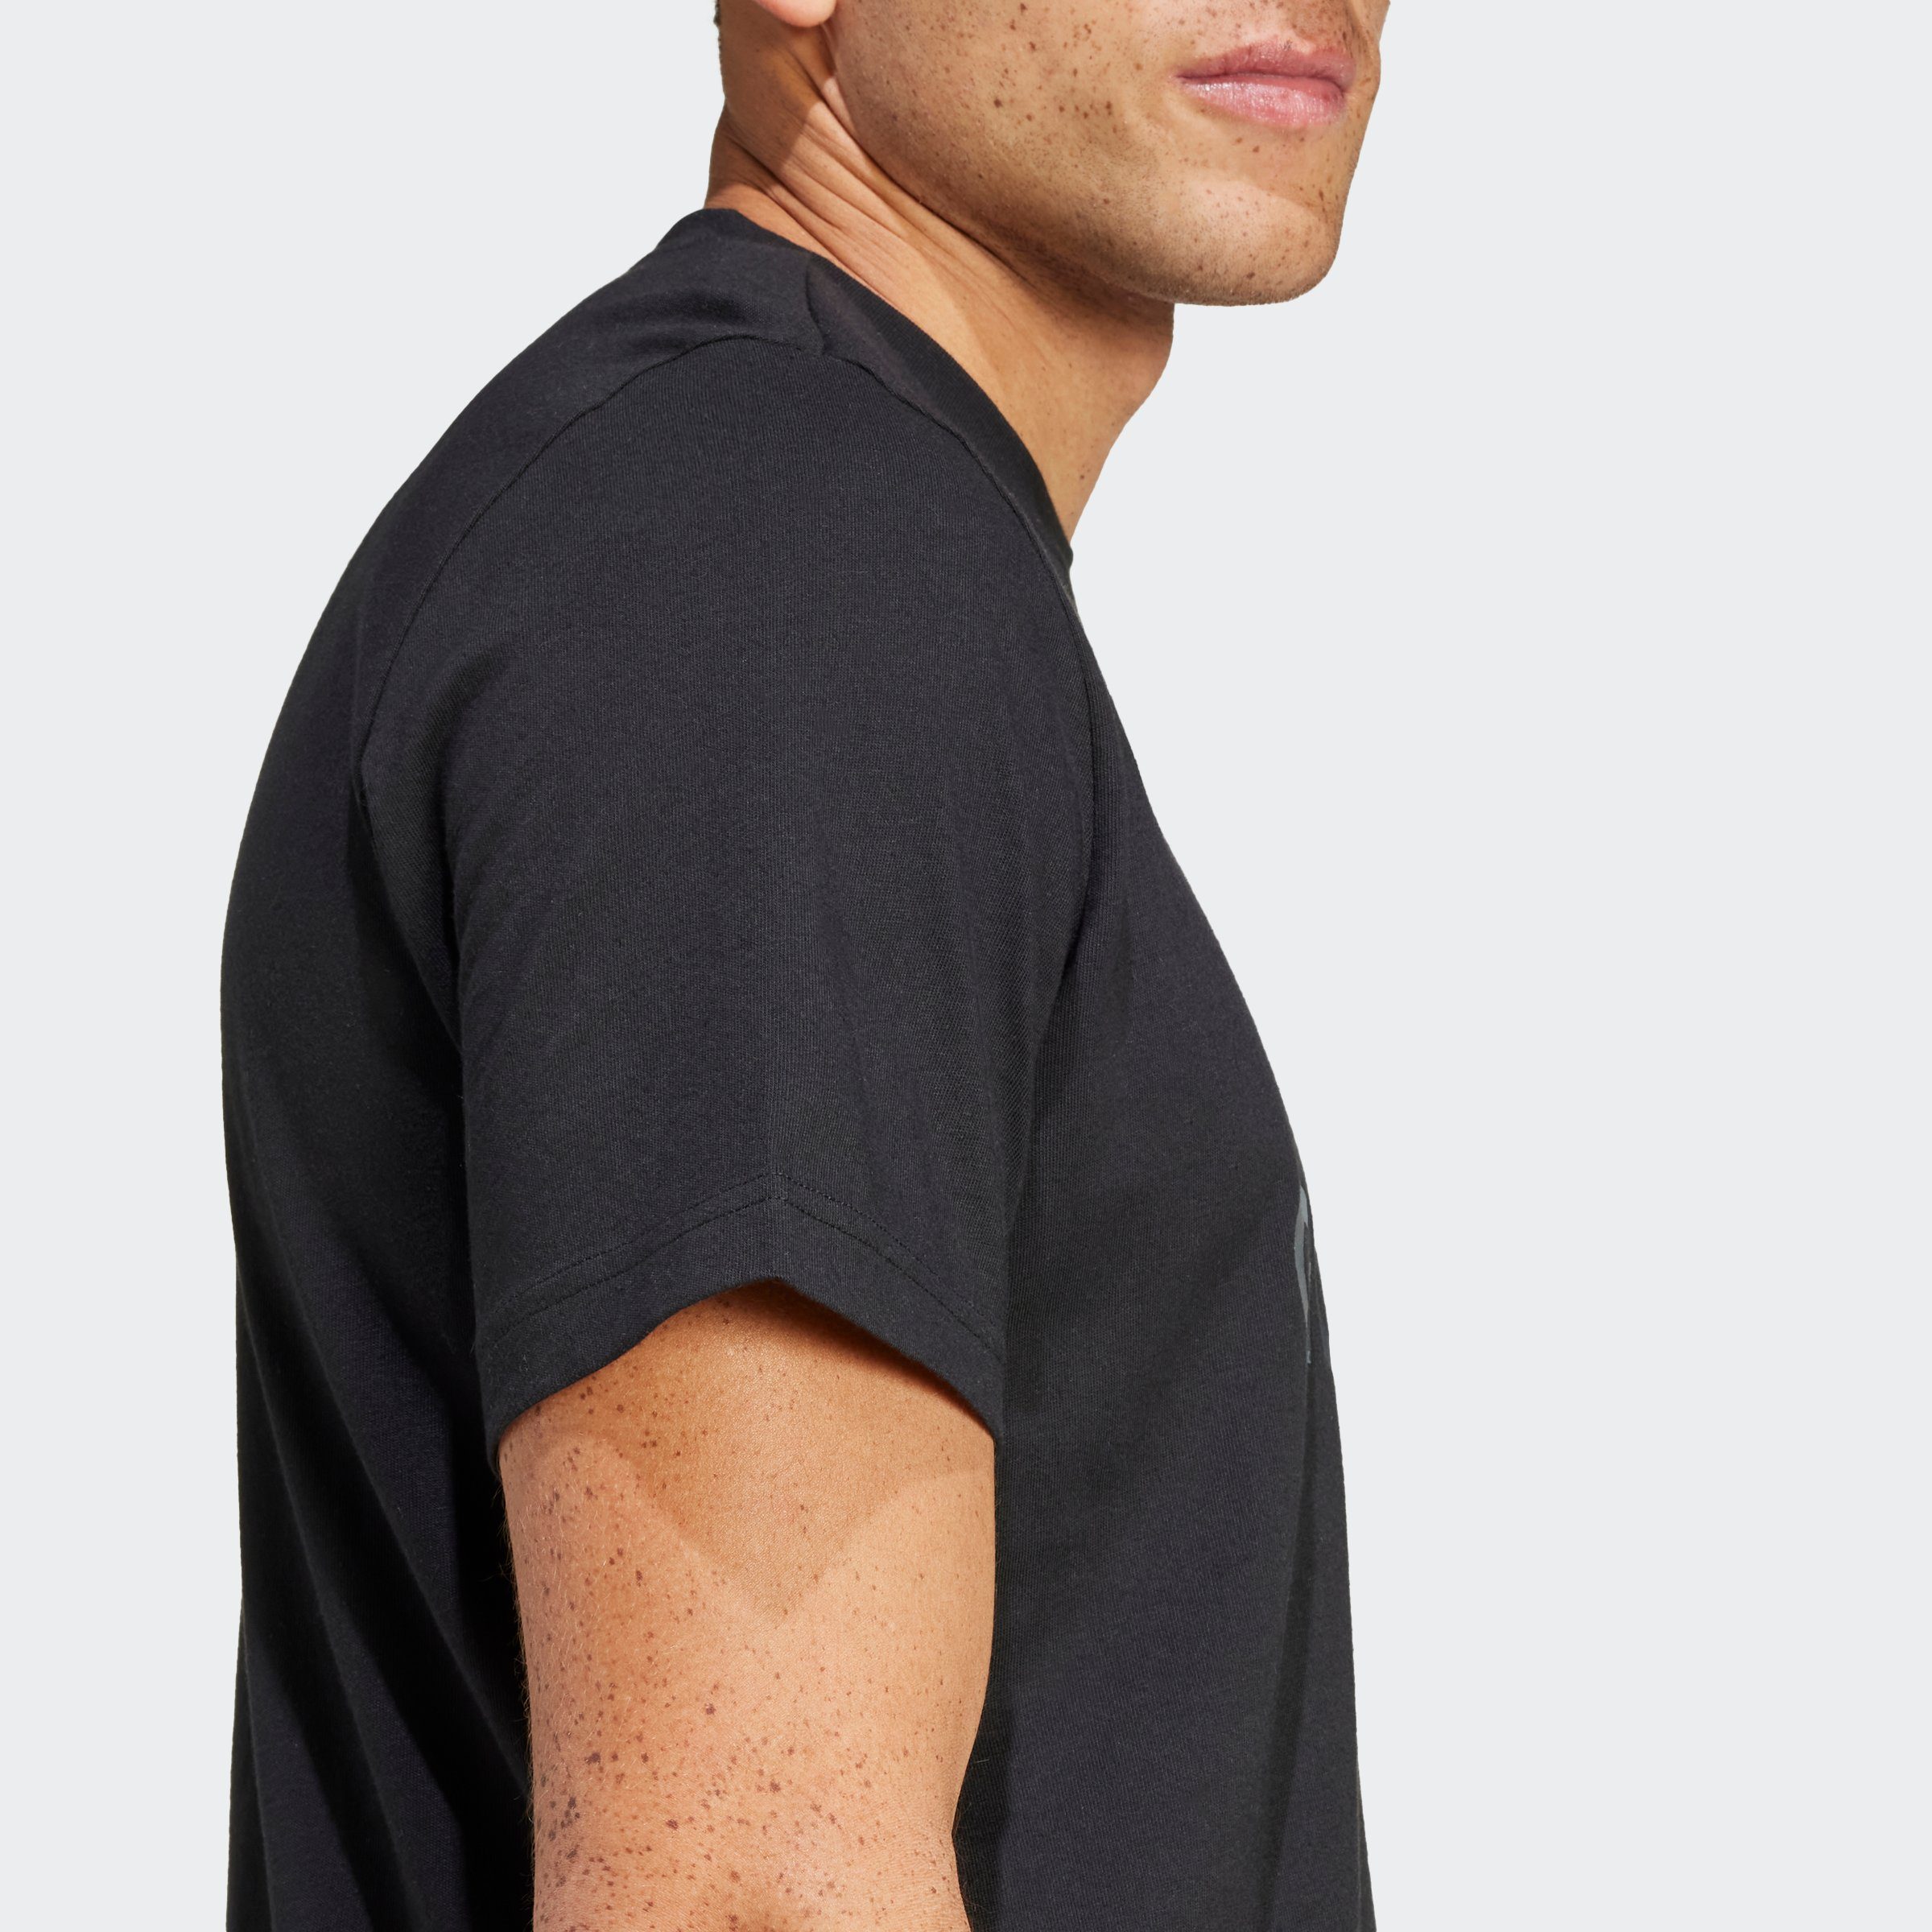 T-Shirt Sportswear M 1 G adidas BLACK CAMO T